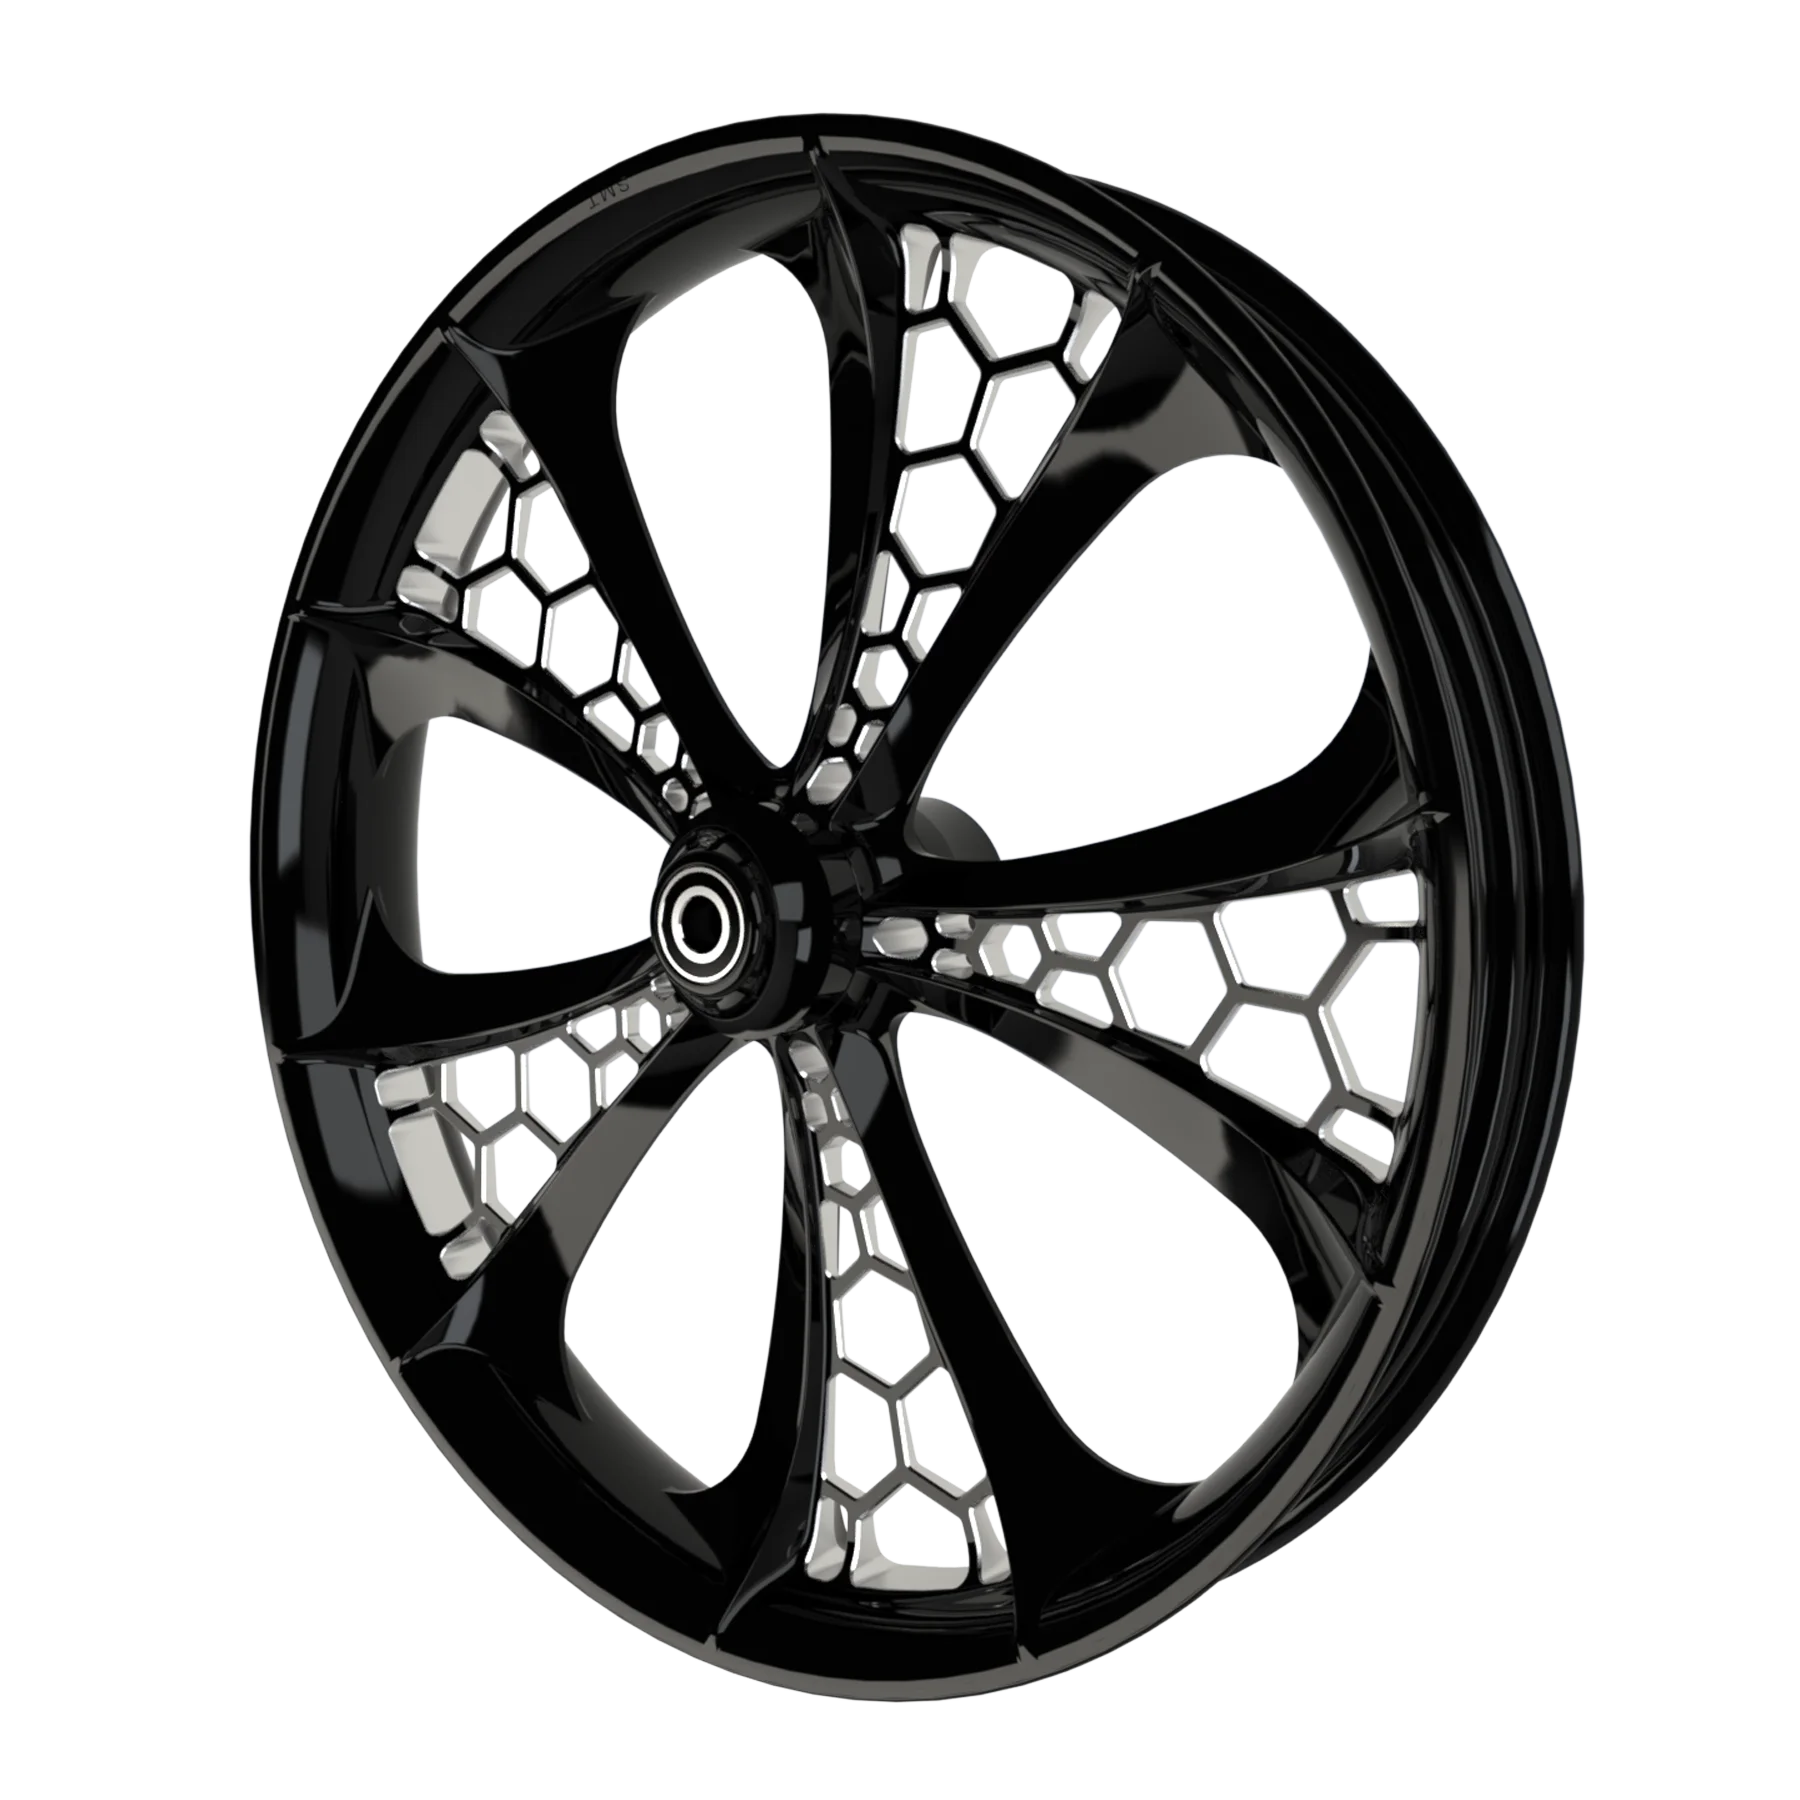 Hive 3D custom motorcycle wheel in black double cut